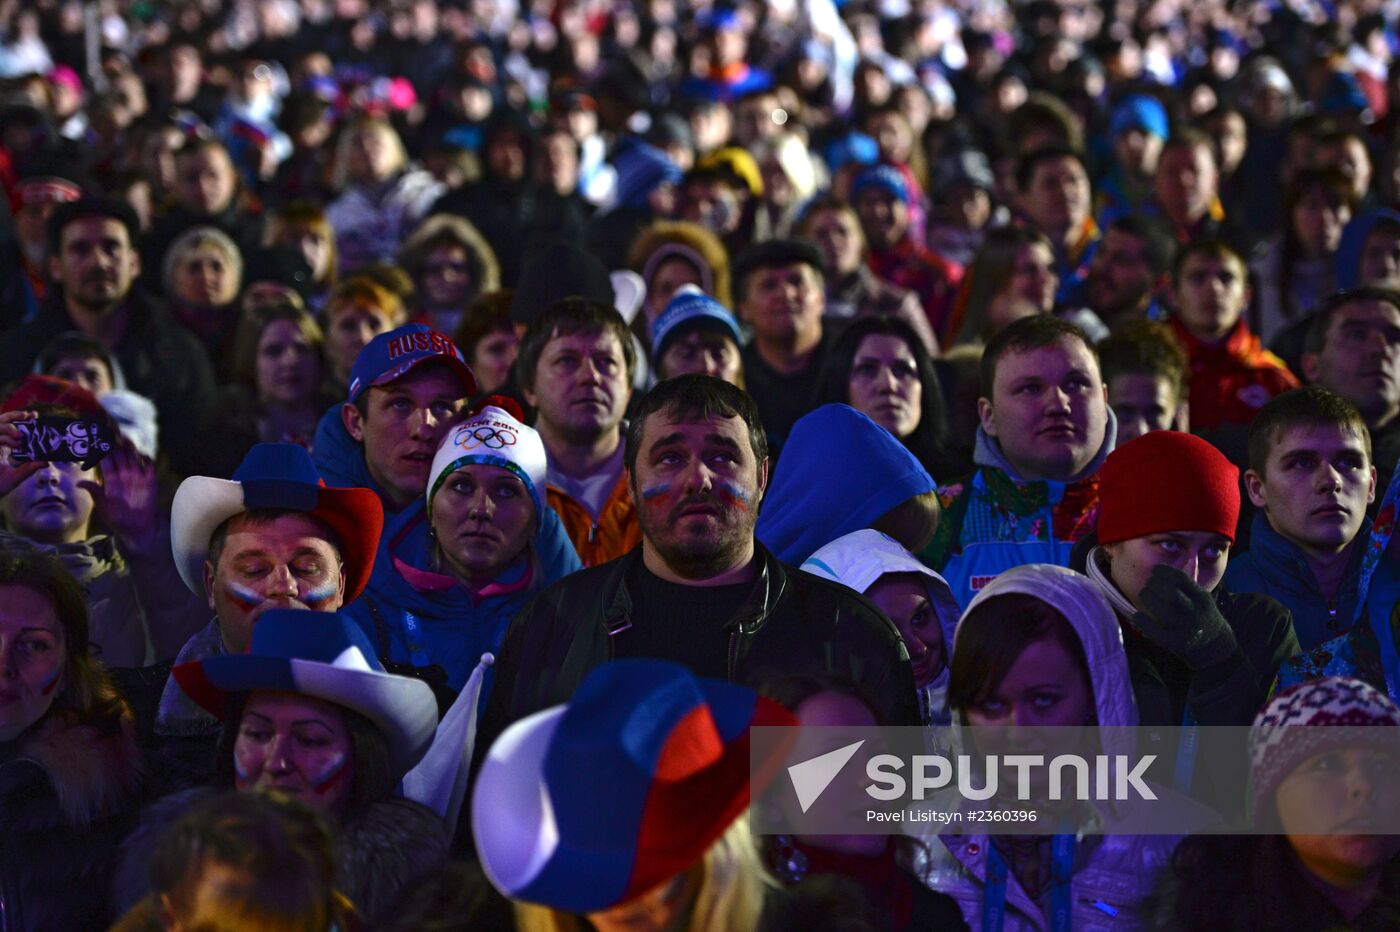 Sochi celebrates XXII Olympic Winter Games opening ceremony